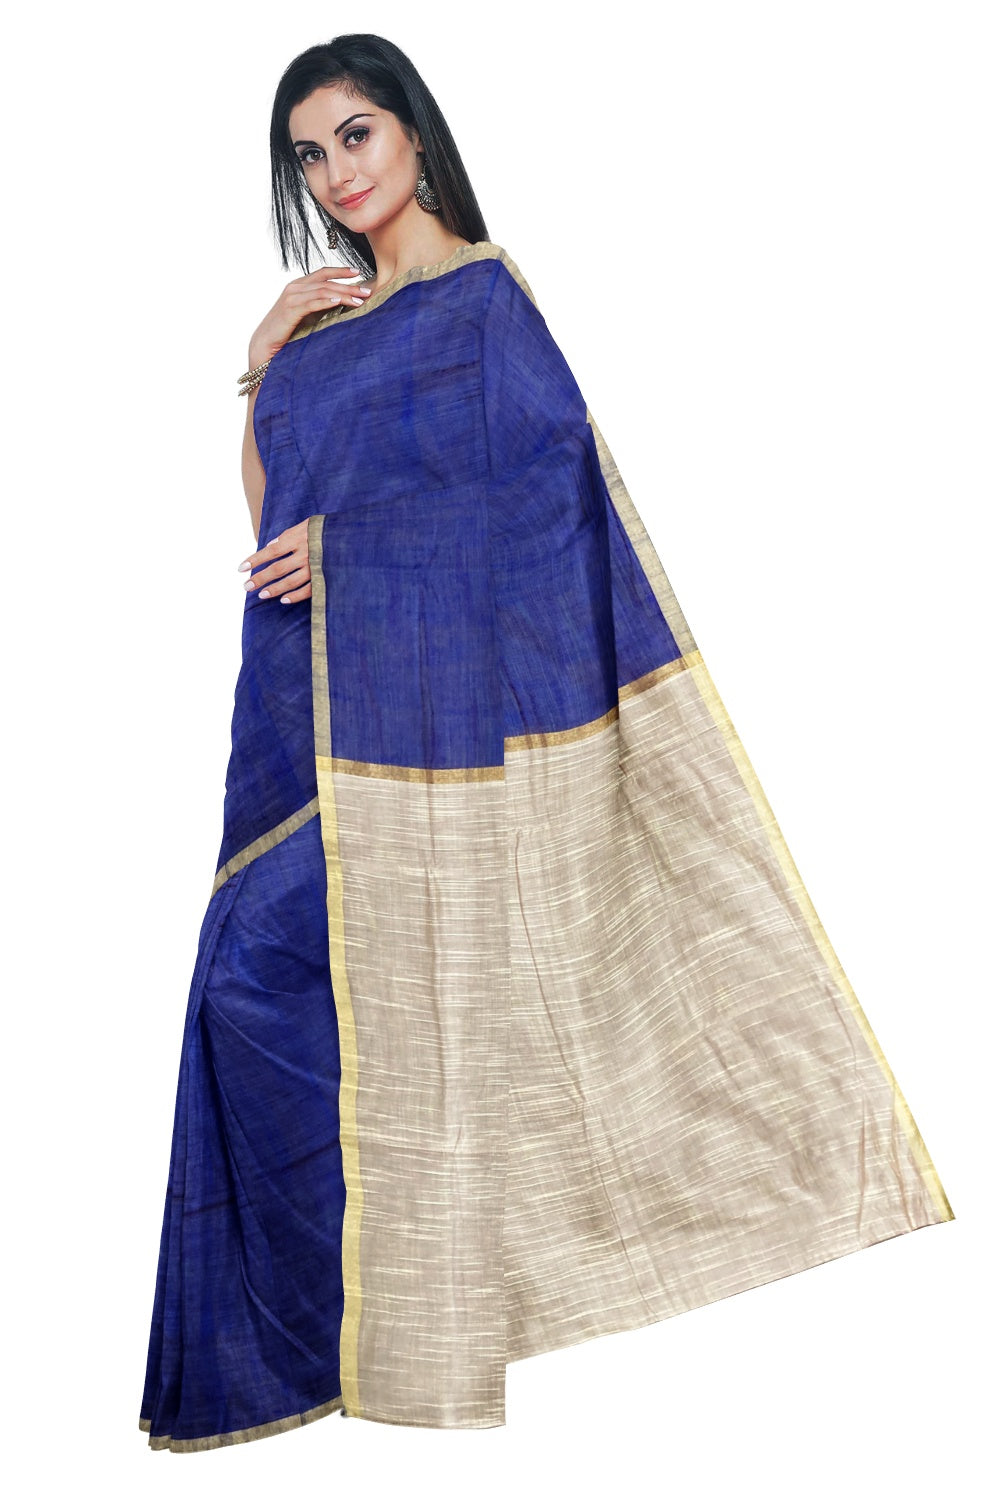 Southloom Kosa / Tussar Work Designer Blue Saree With Pinkish Pallu